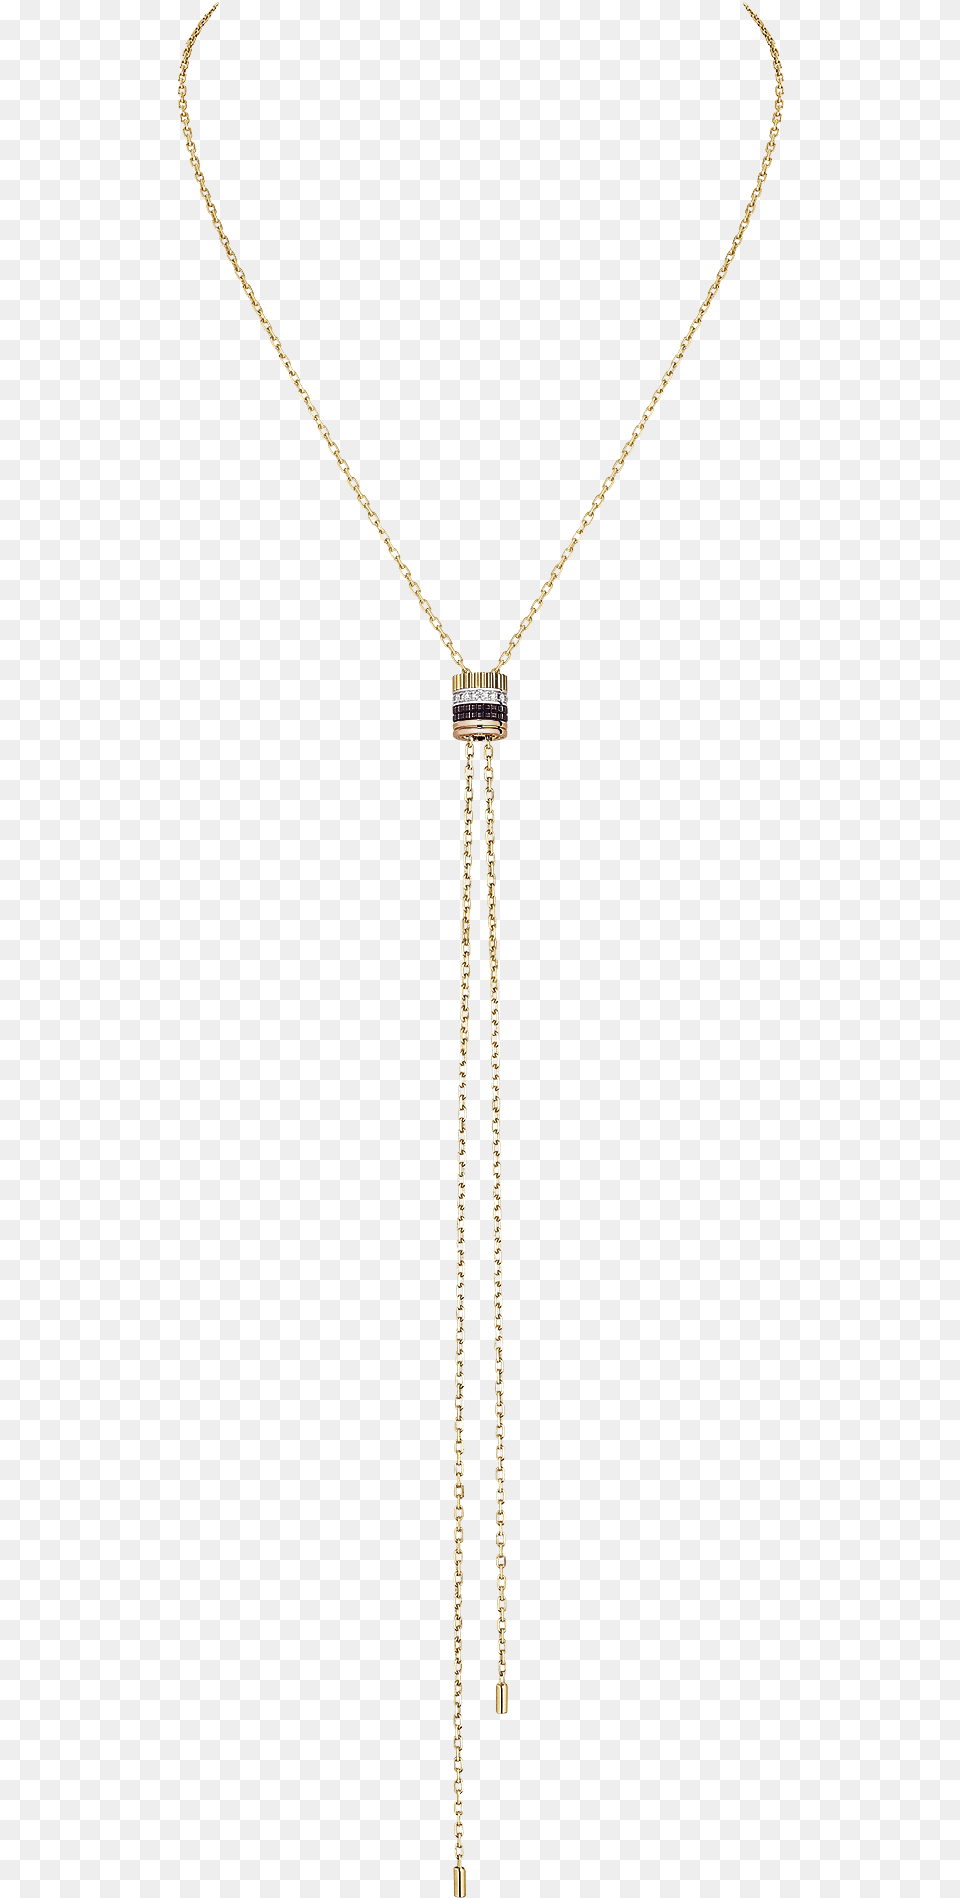 Large Quatre Classique Tie Necklace Paved With Diamonds Pendant, Accessories, Jewelry, Diamond, Gemstone Png